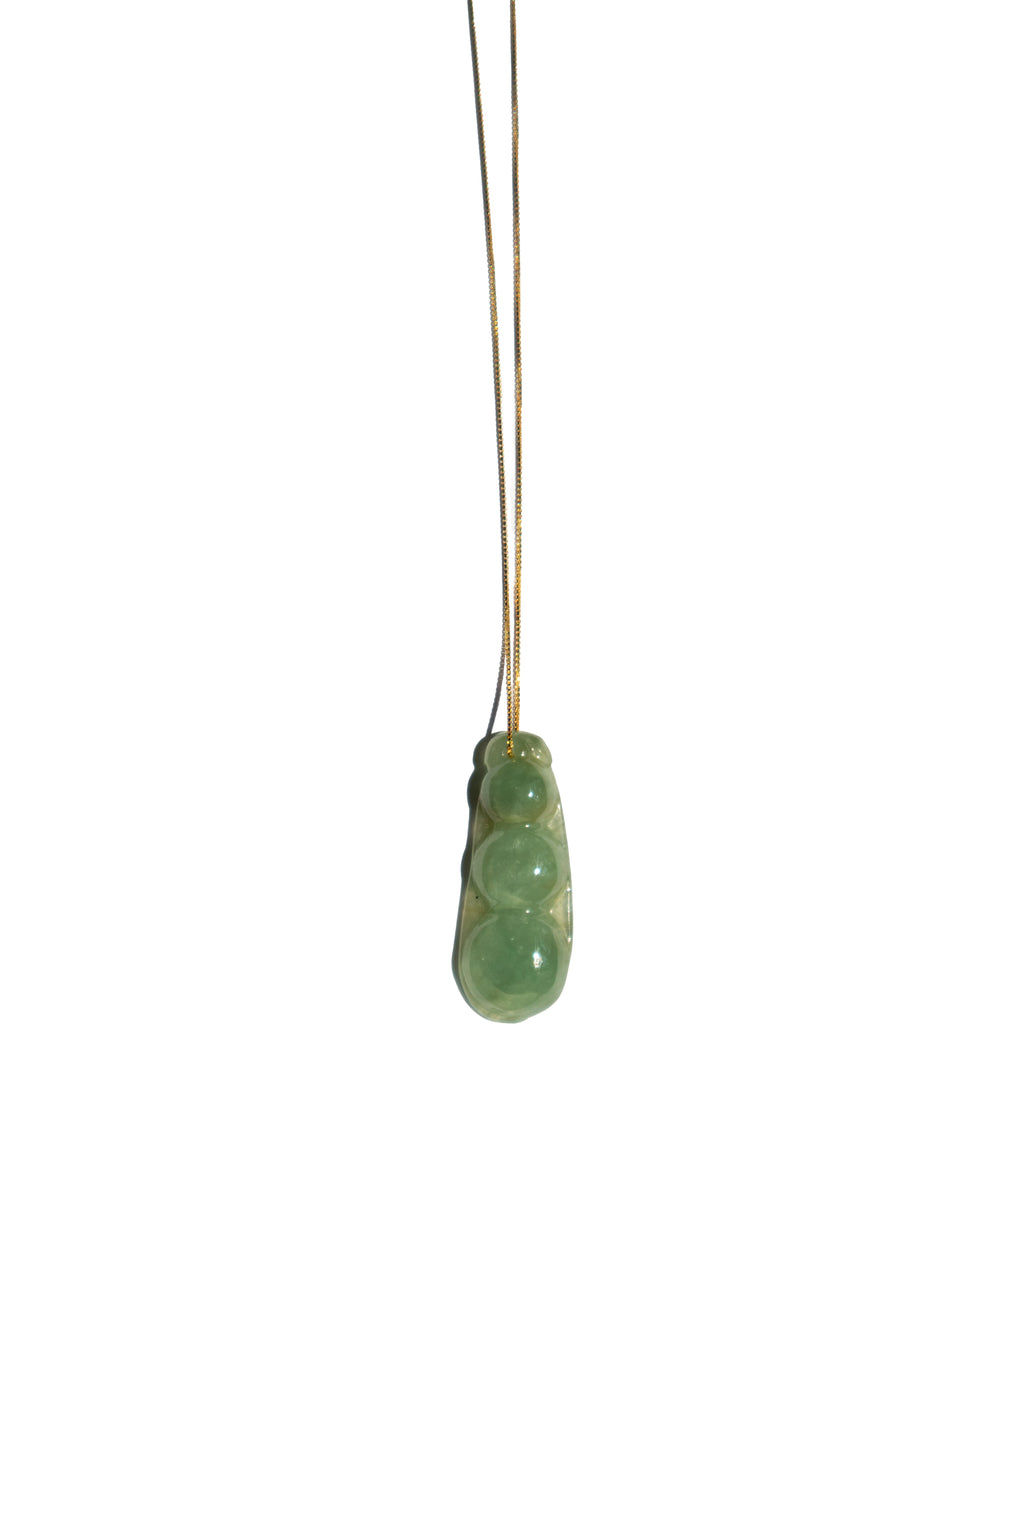 seree-edamame-jade-pendant-necklace-in-green-jadeite